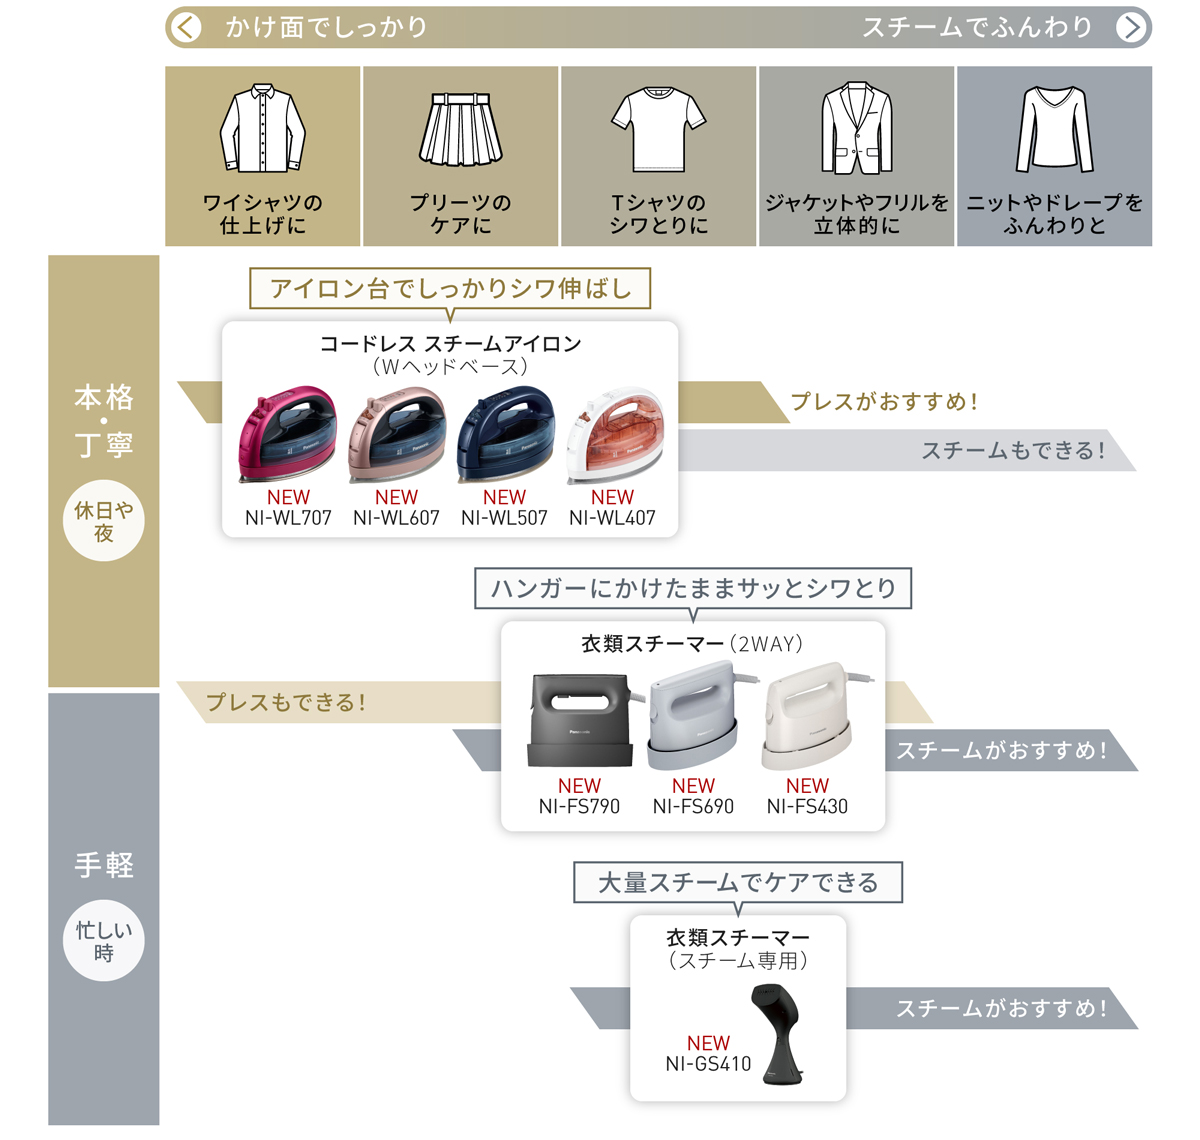 lineup selectchart 2 1200 - 衣類スチーマー【鬼比較】NI-FS690とNI-FS580 違い口コミ レビュー!